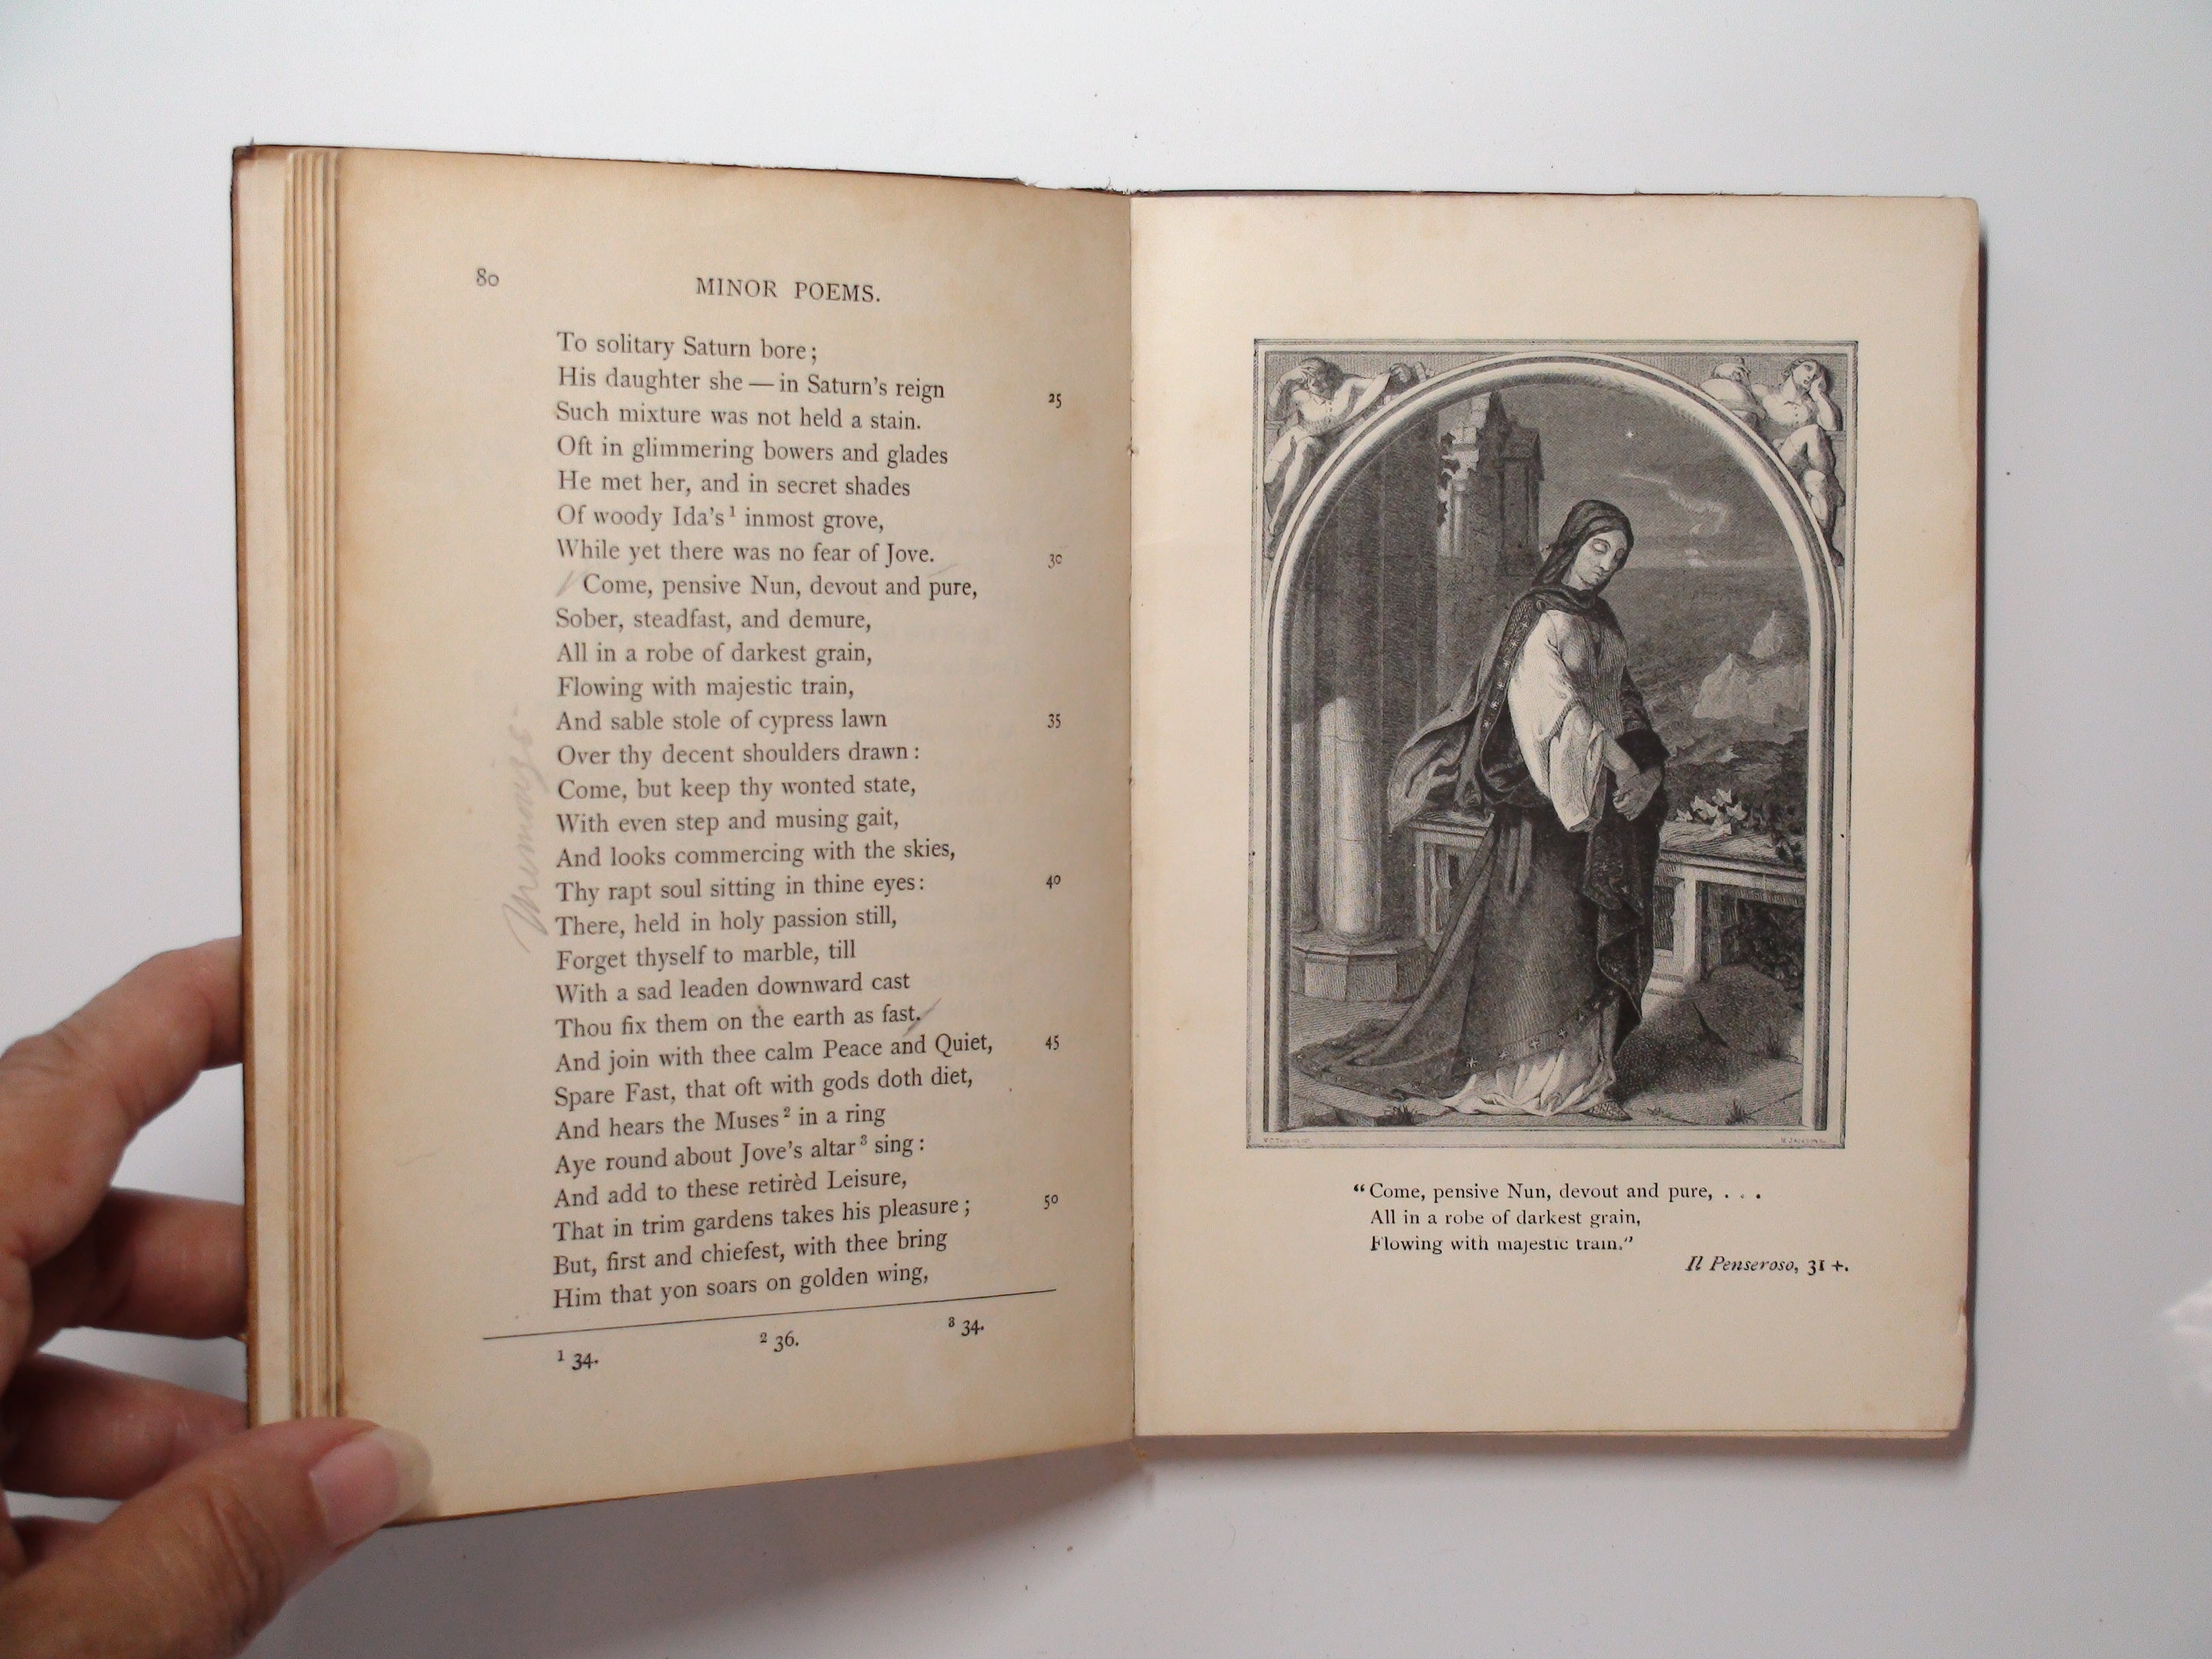 Select Minor Poems of John Milton, Illustrator, 1903